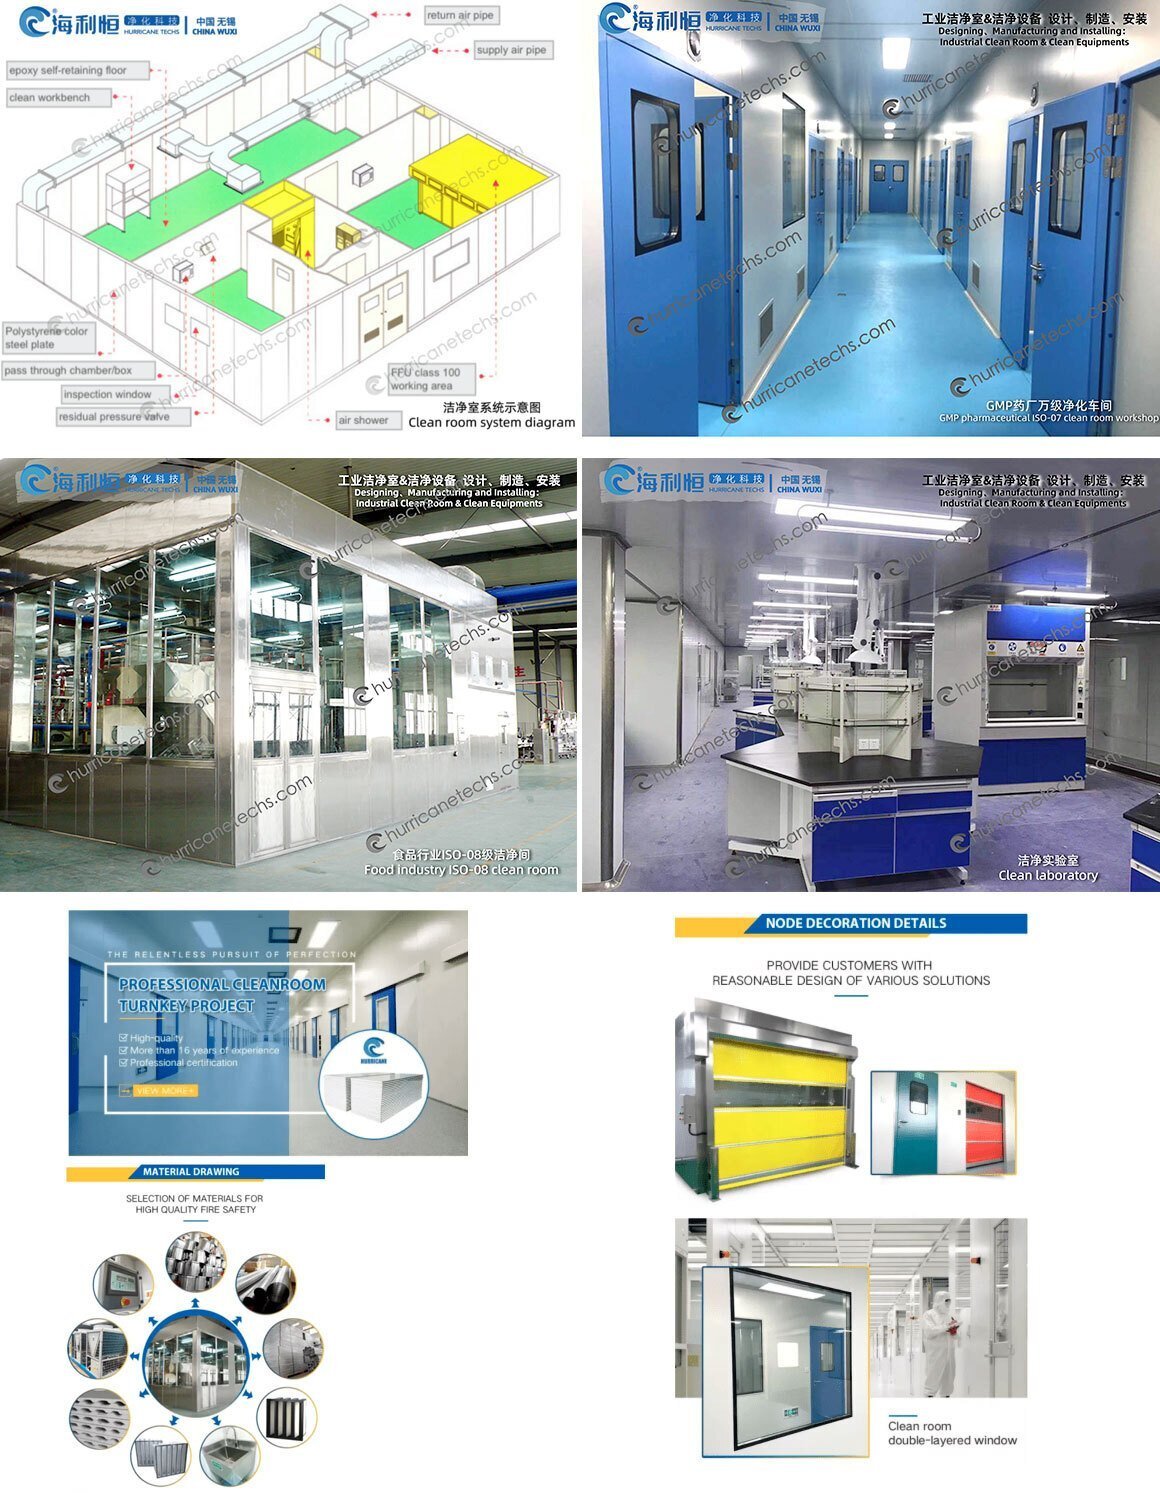 ISO 14644-1 Cleanroom